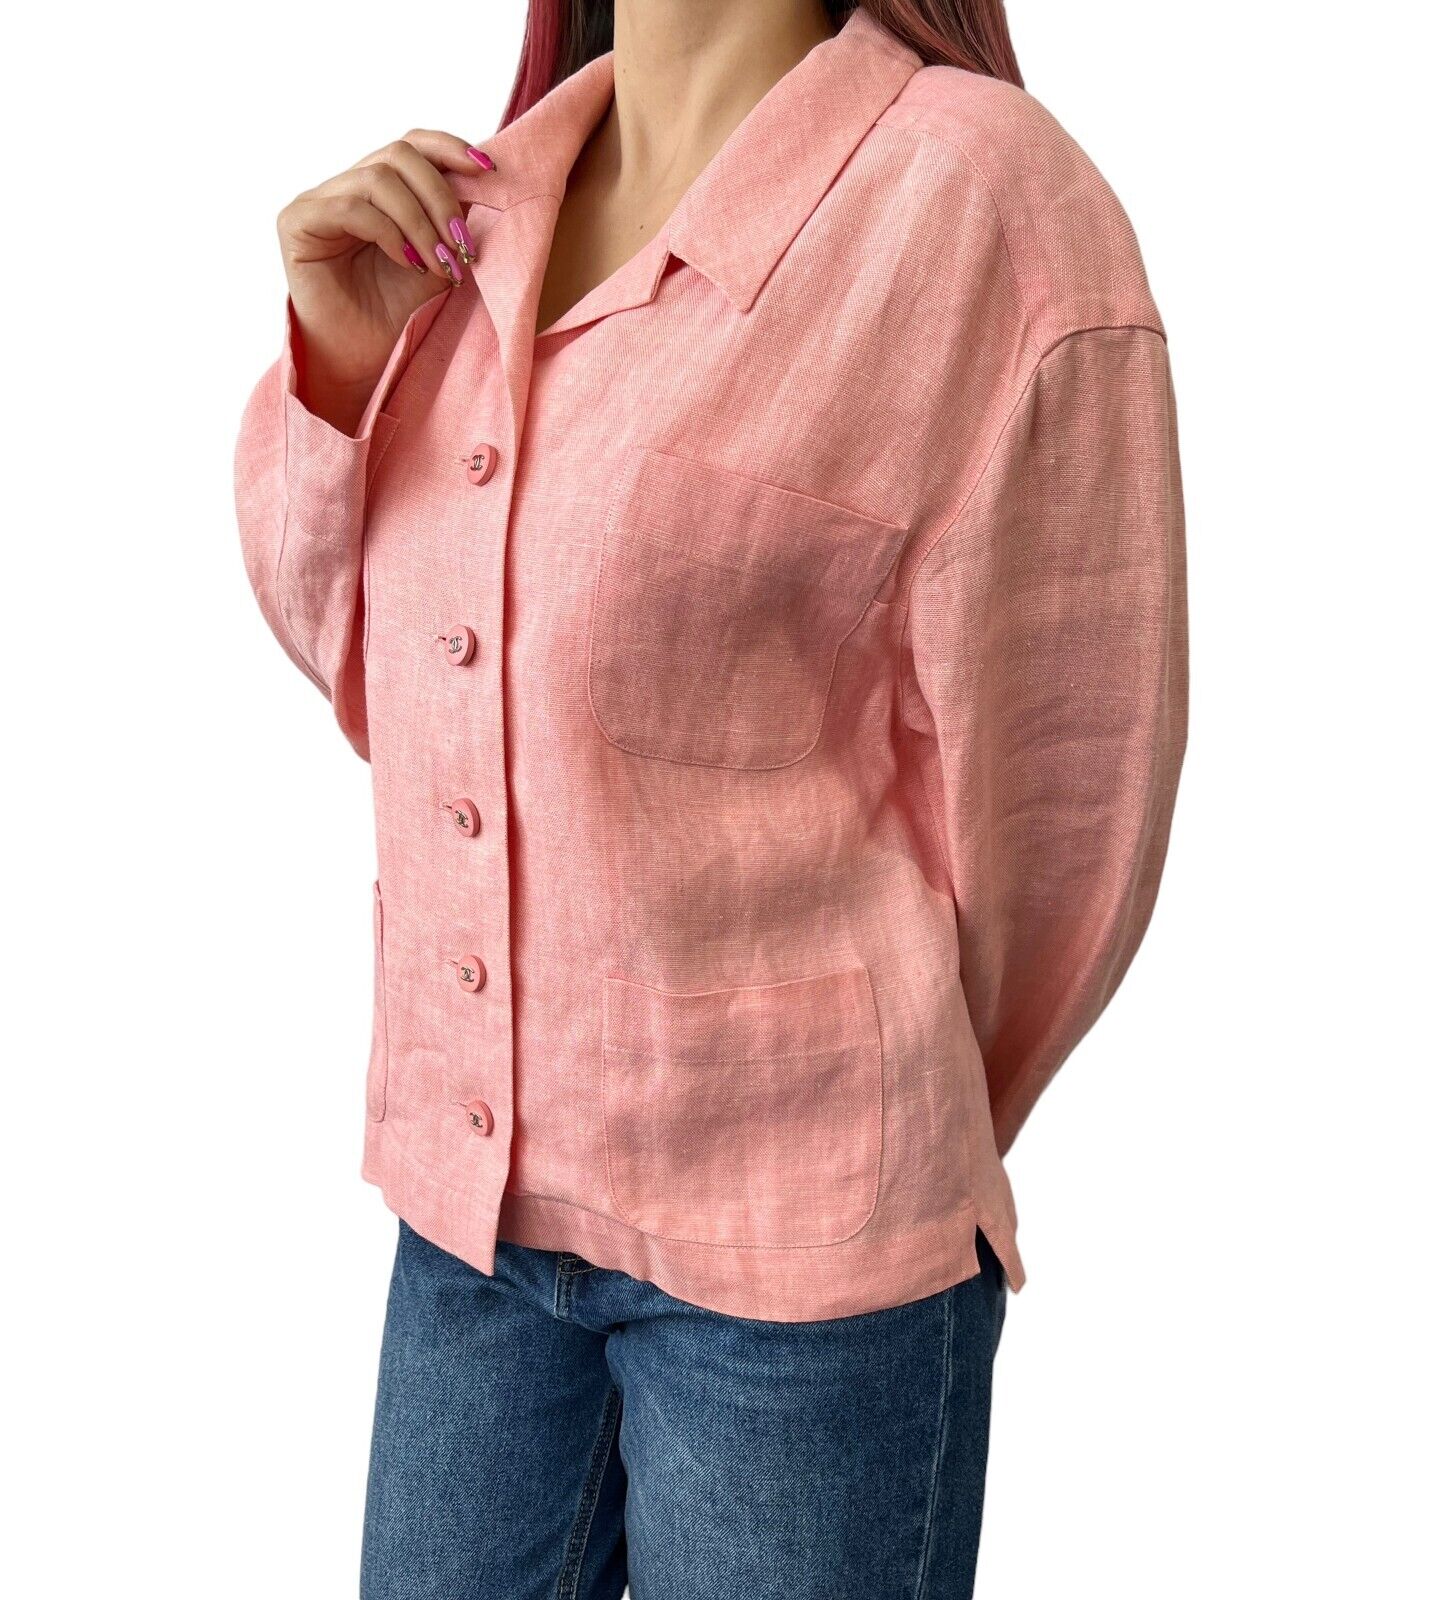 CHANEL Vintage 96P CC Mark Button Linen Jacket #36 Pocket Pink Rank AB